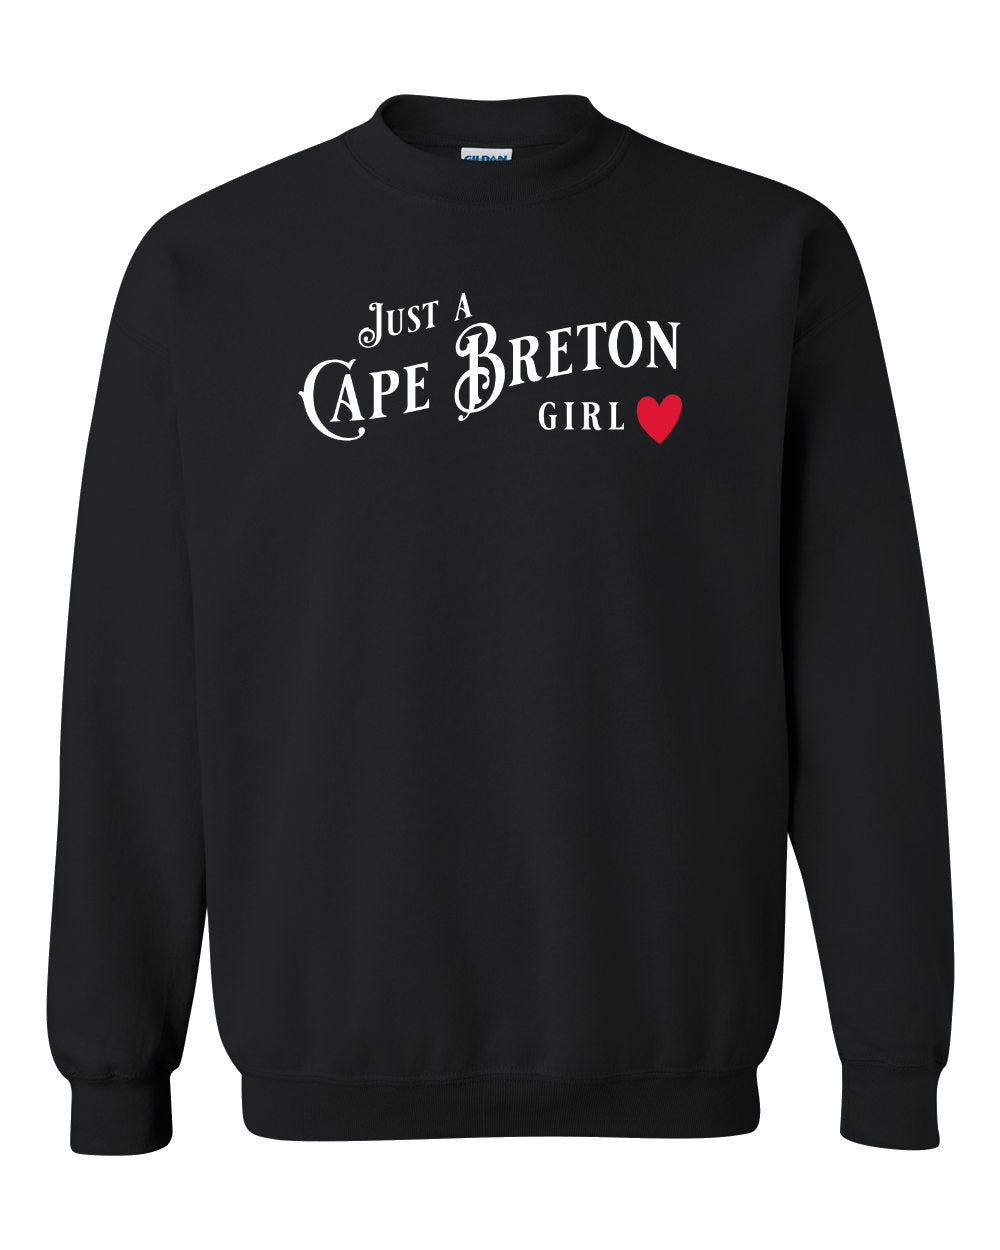 Just a Cape Breton Girl Sweatshirt